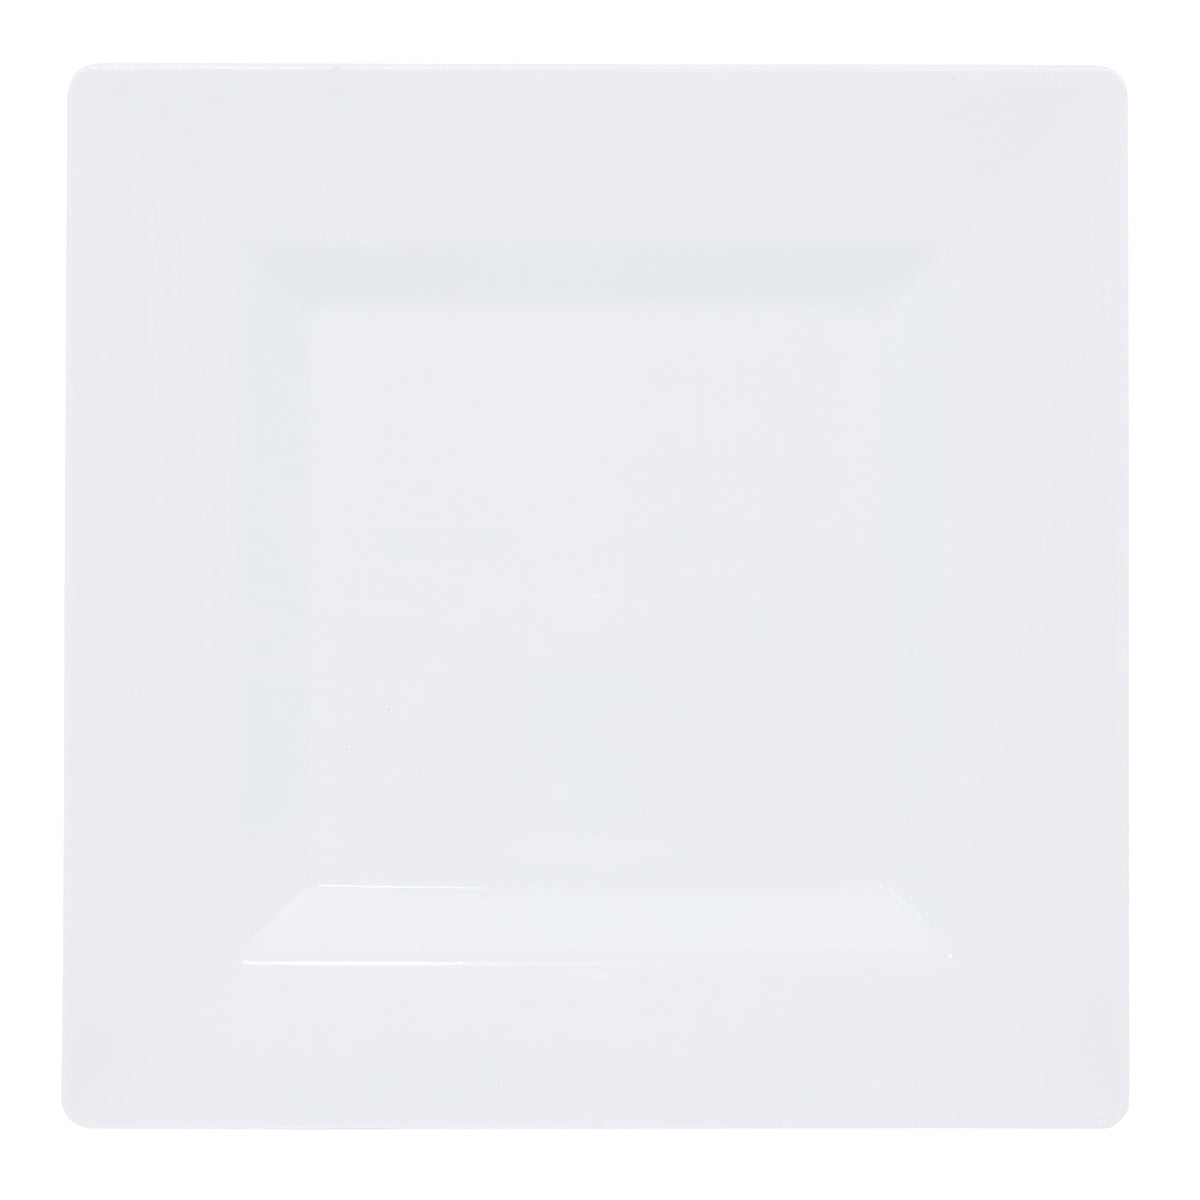 Ritch Import Disposable-Plasticware White Square Plates, 9 Inches, 8 Count 655731156290